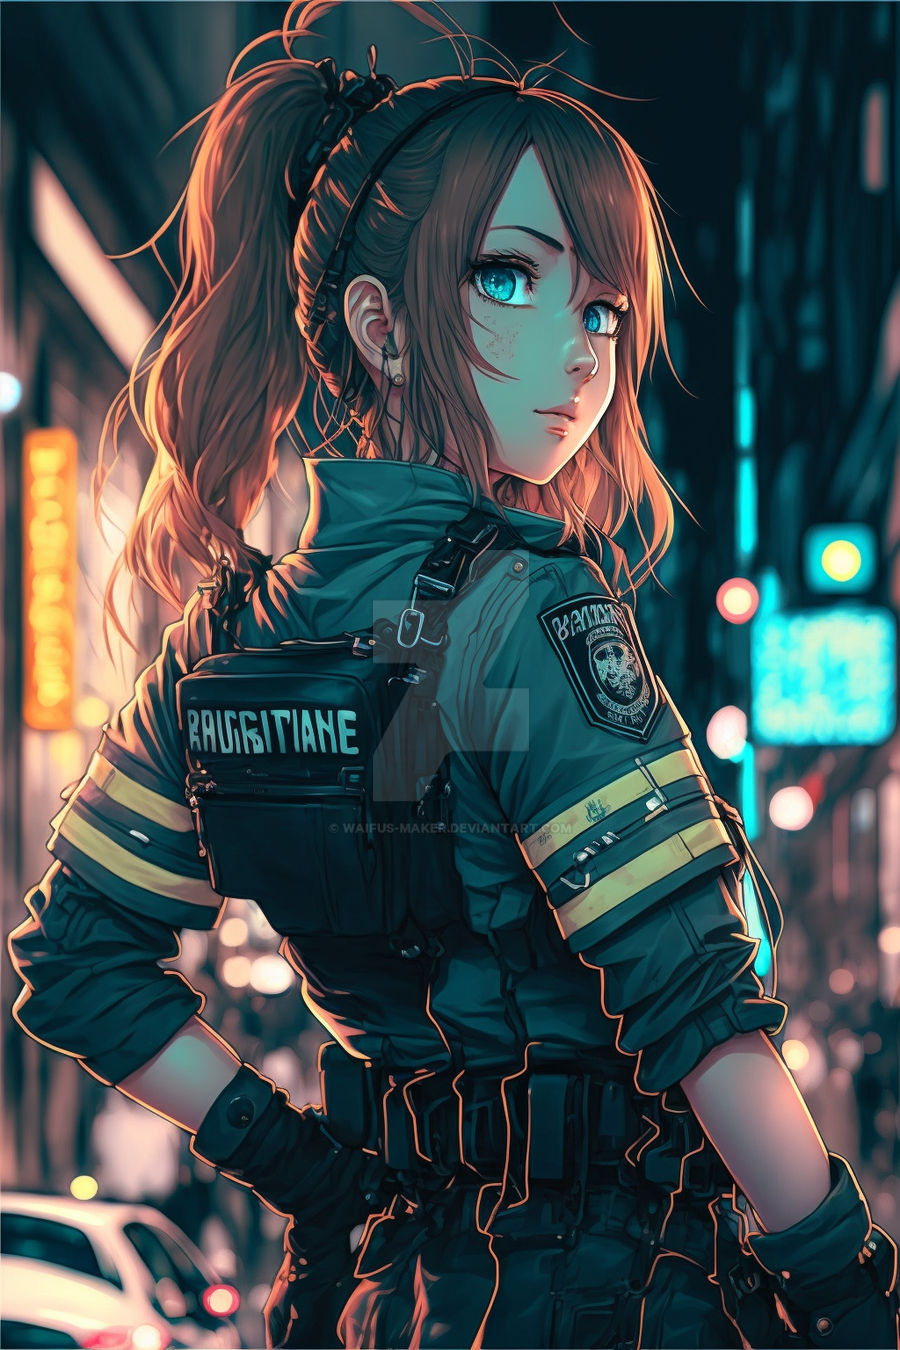 Urban Anime Girl#39 by Waifus-Maker on DeviantArt